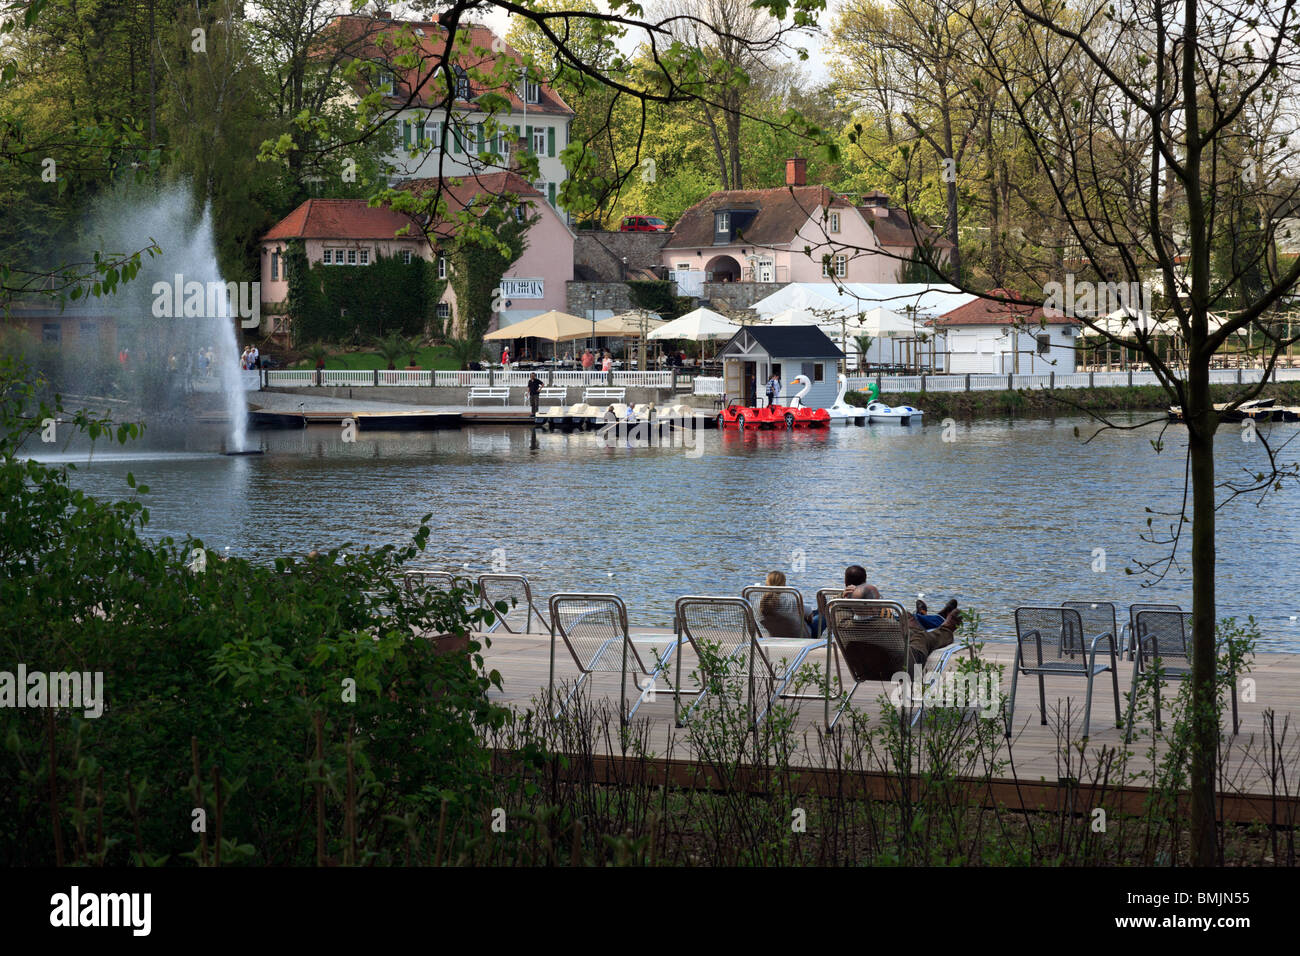 The boating lake in Bad Nauheim's Kurpark, Germany. Stock Photo